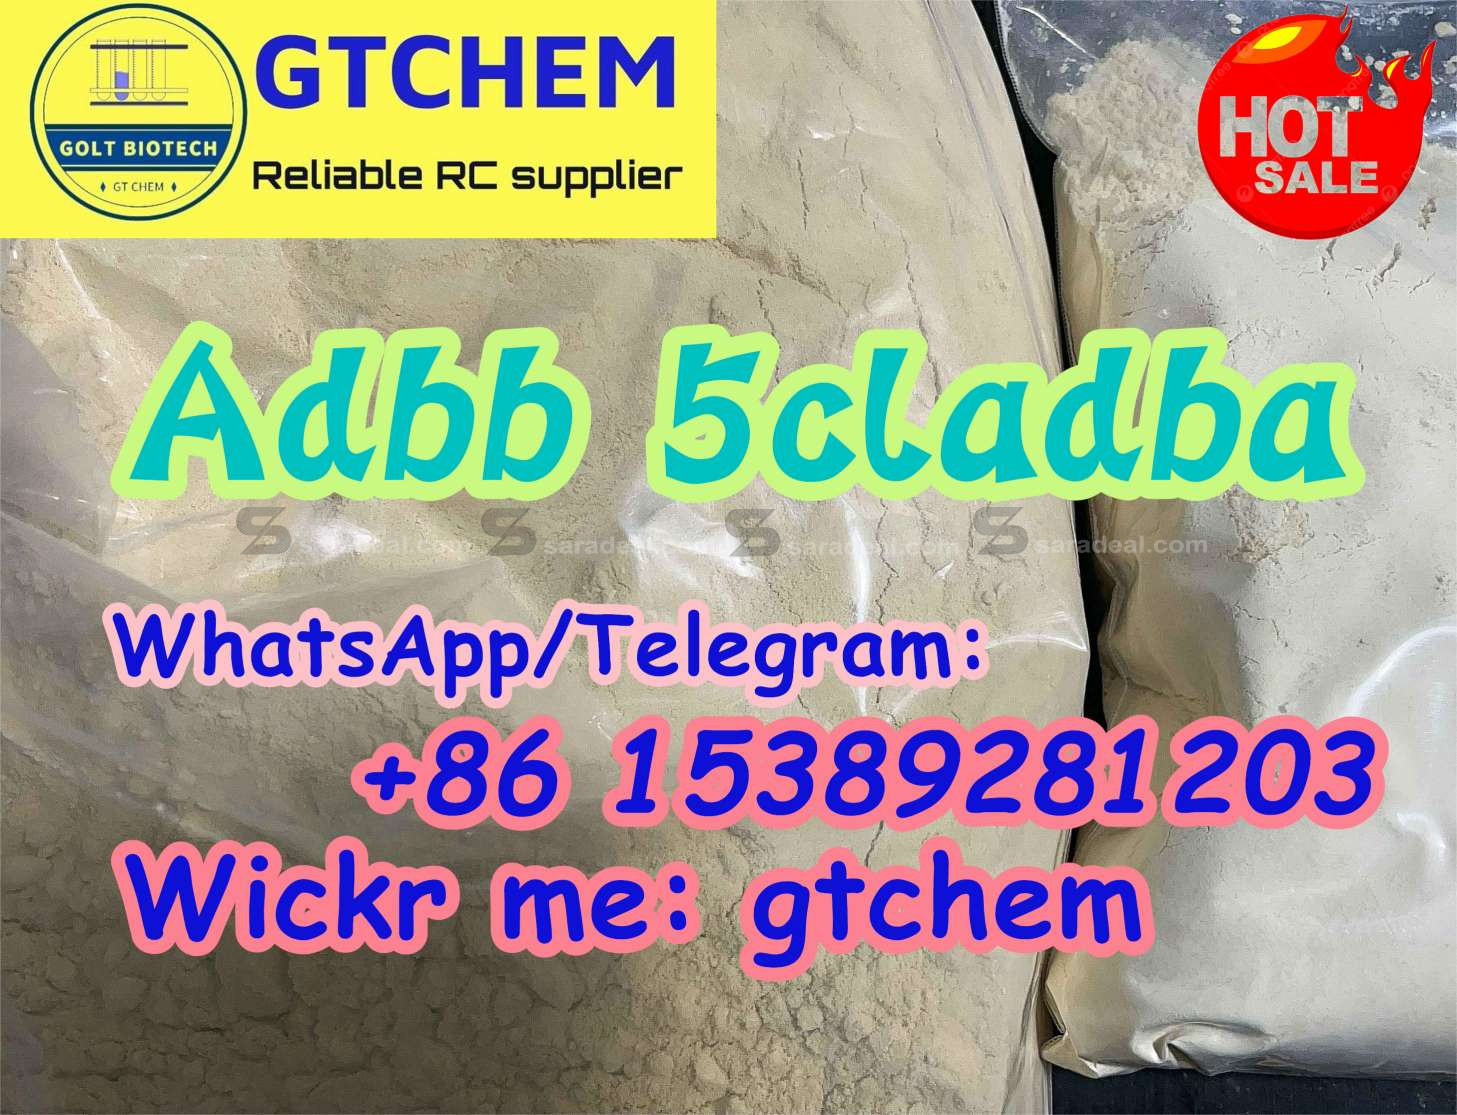 ADBB 5cladba buy 6c adbb powder 5cl ADBB precursor